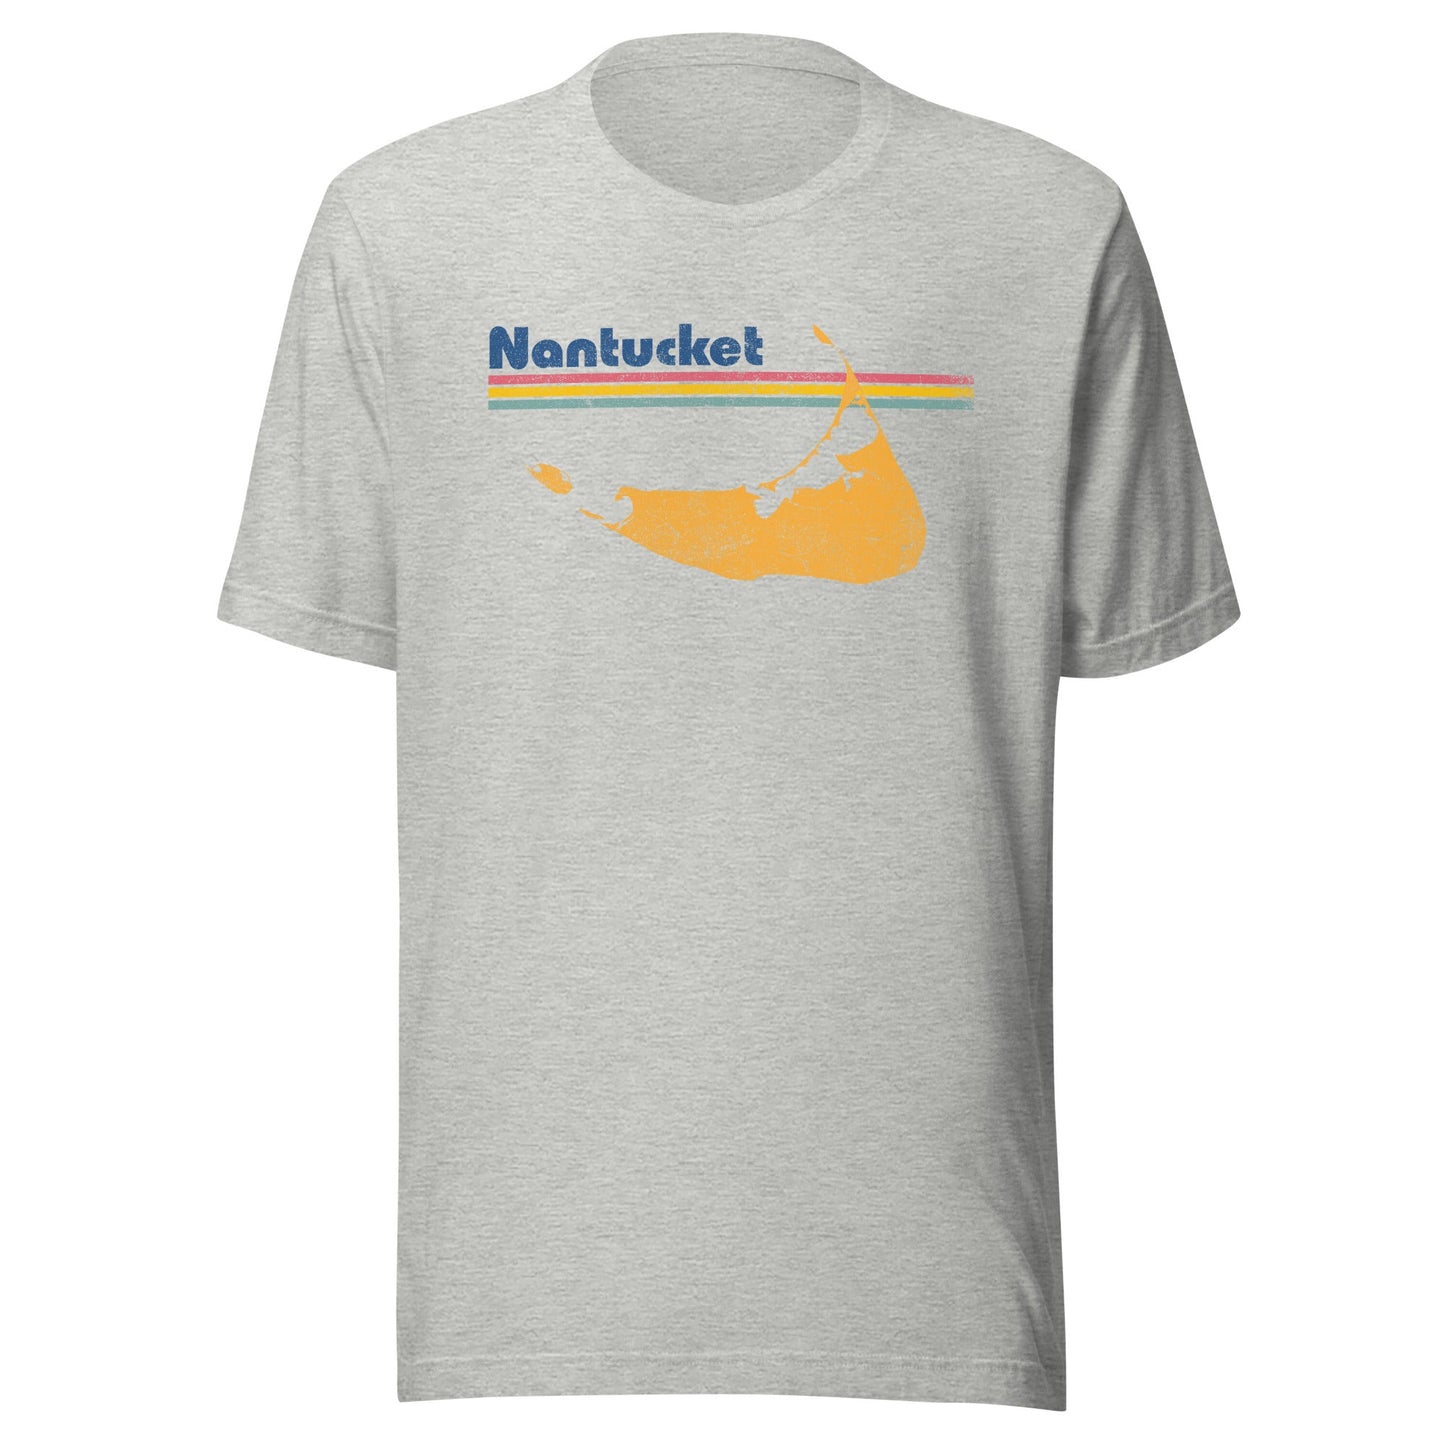 Nantucket T-Shirt - Cape Cod & Islands, MA | Retro Summer Island Tee